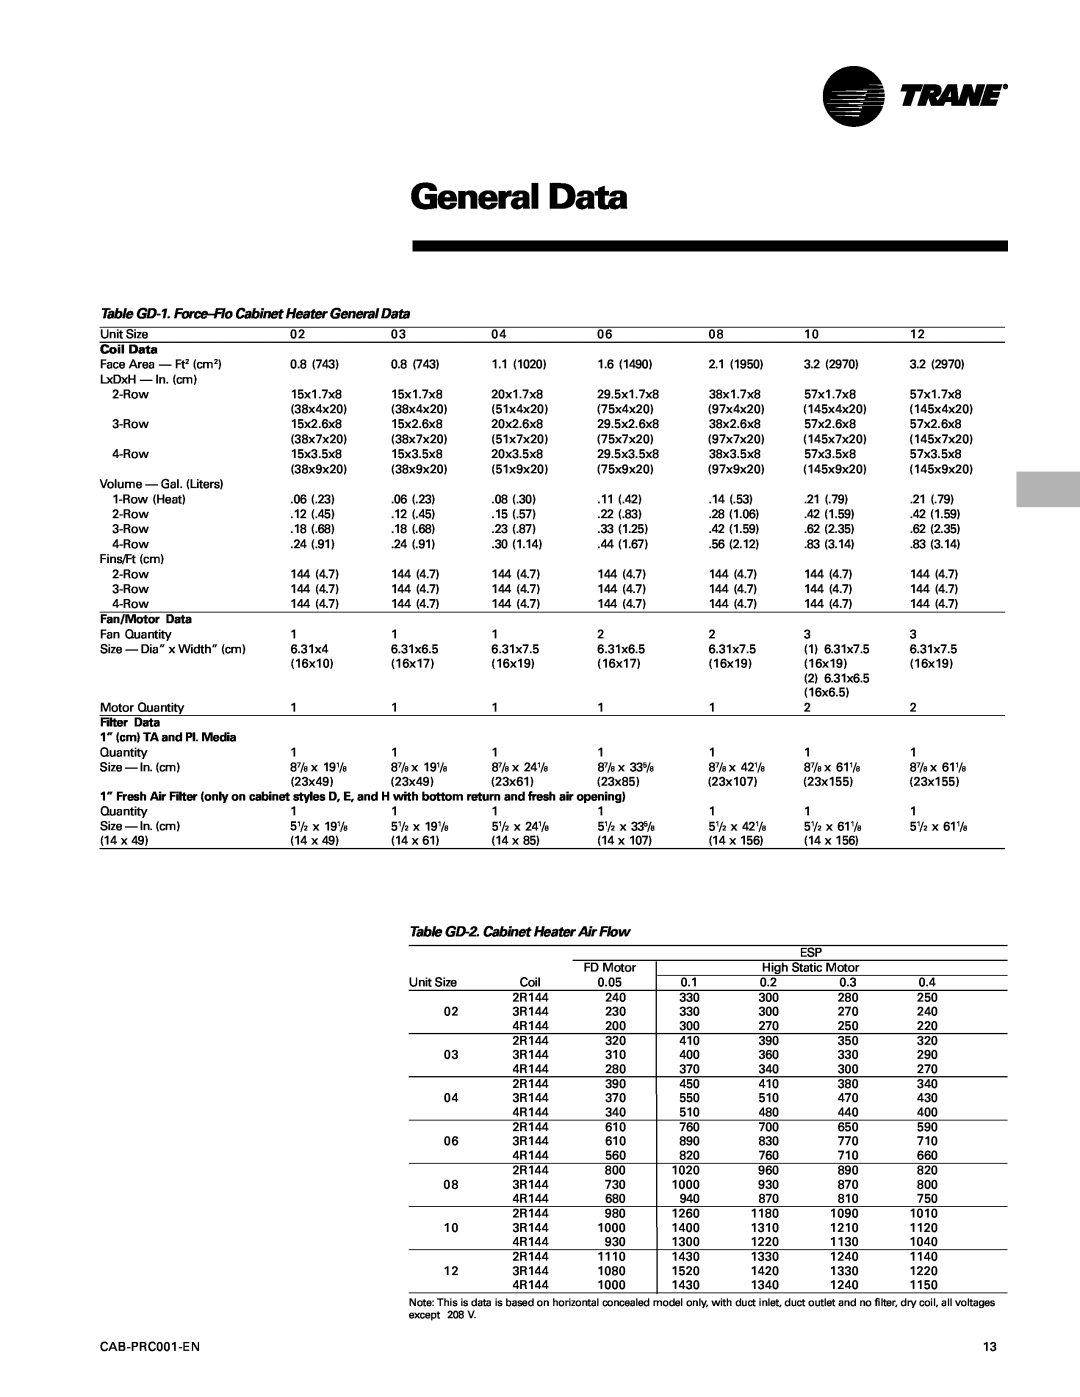 Trane CAB-PRC001-EN manual General Data, Coil Data, Fan/Motor Data, Filter Data, 1” cm TA and Pl. Media 